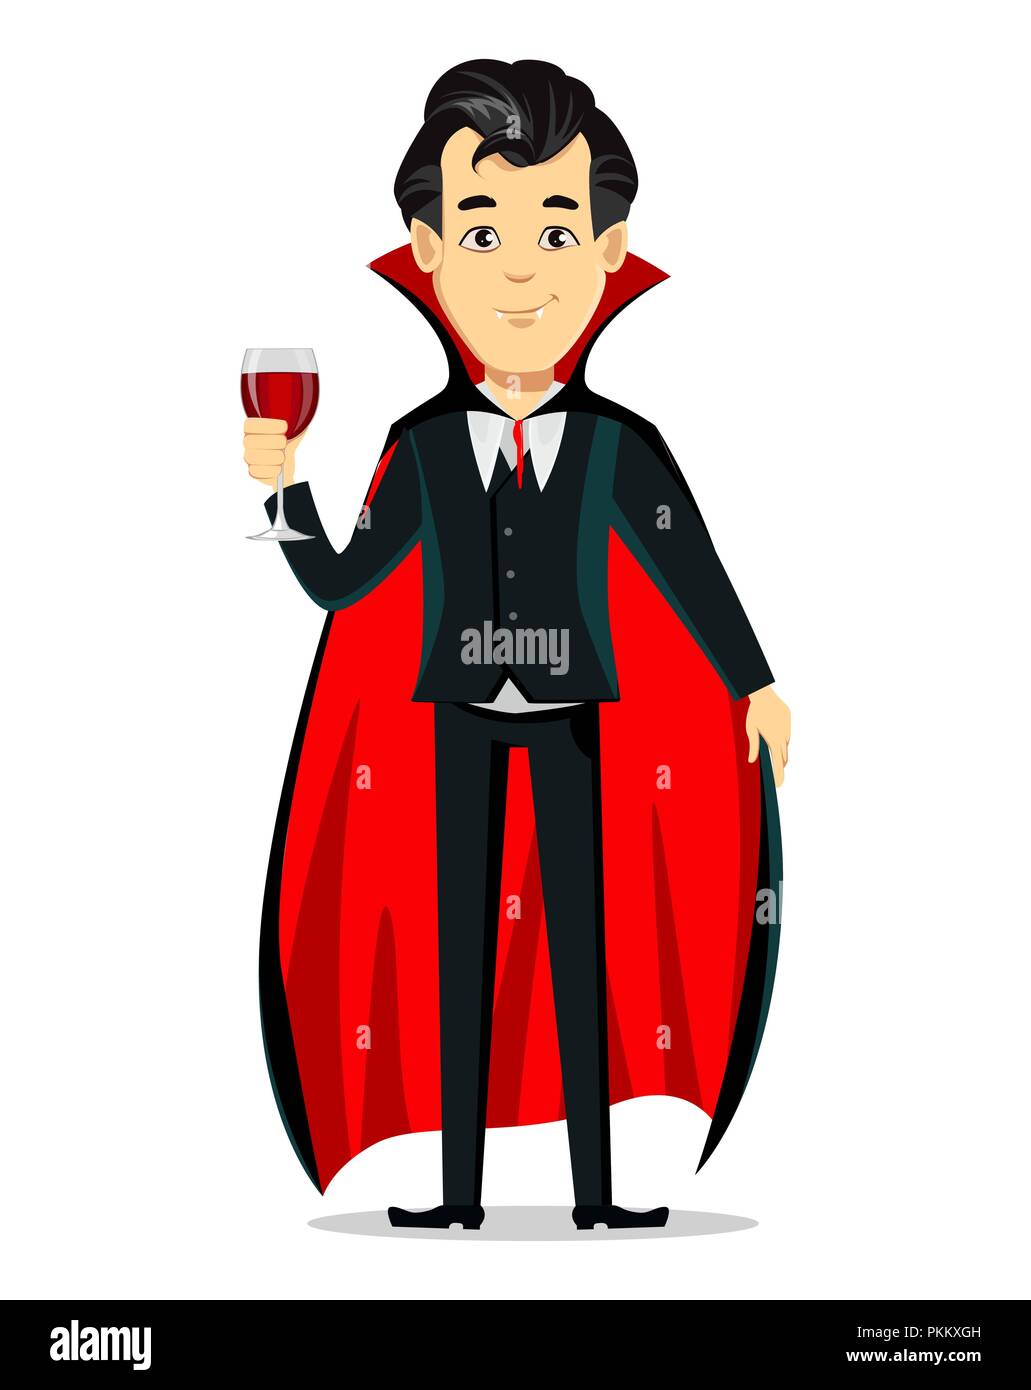 Cartoon Vampire Drinking Blood, Stock vector